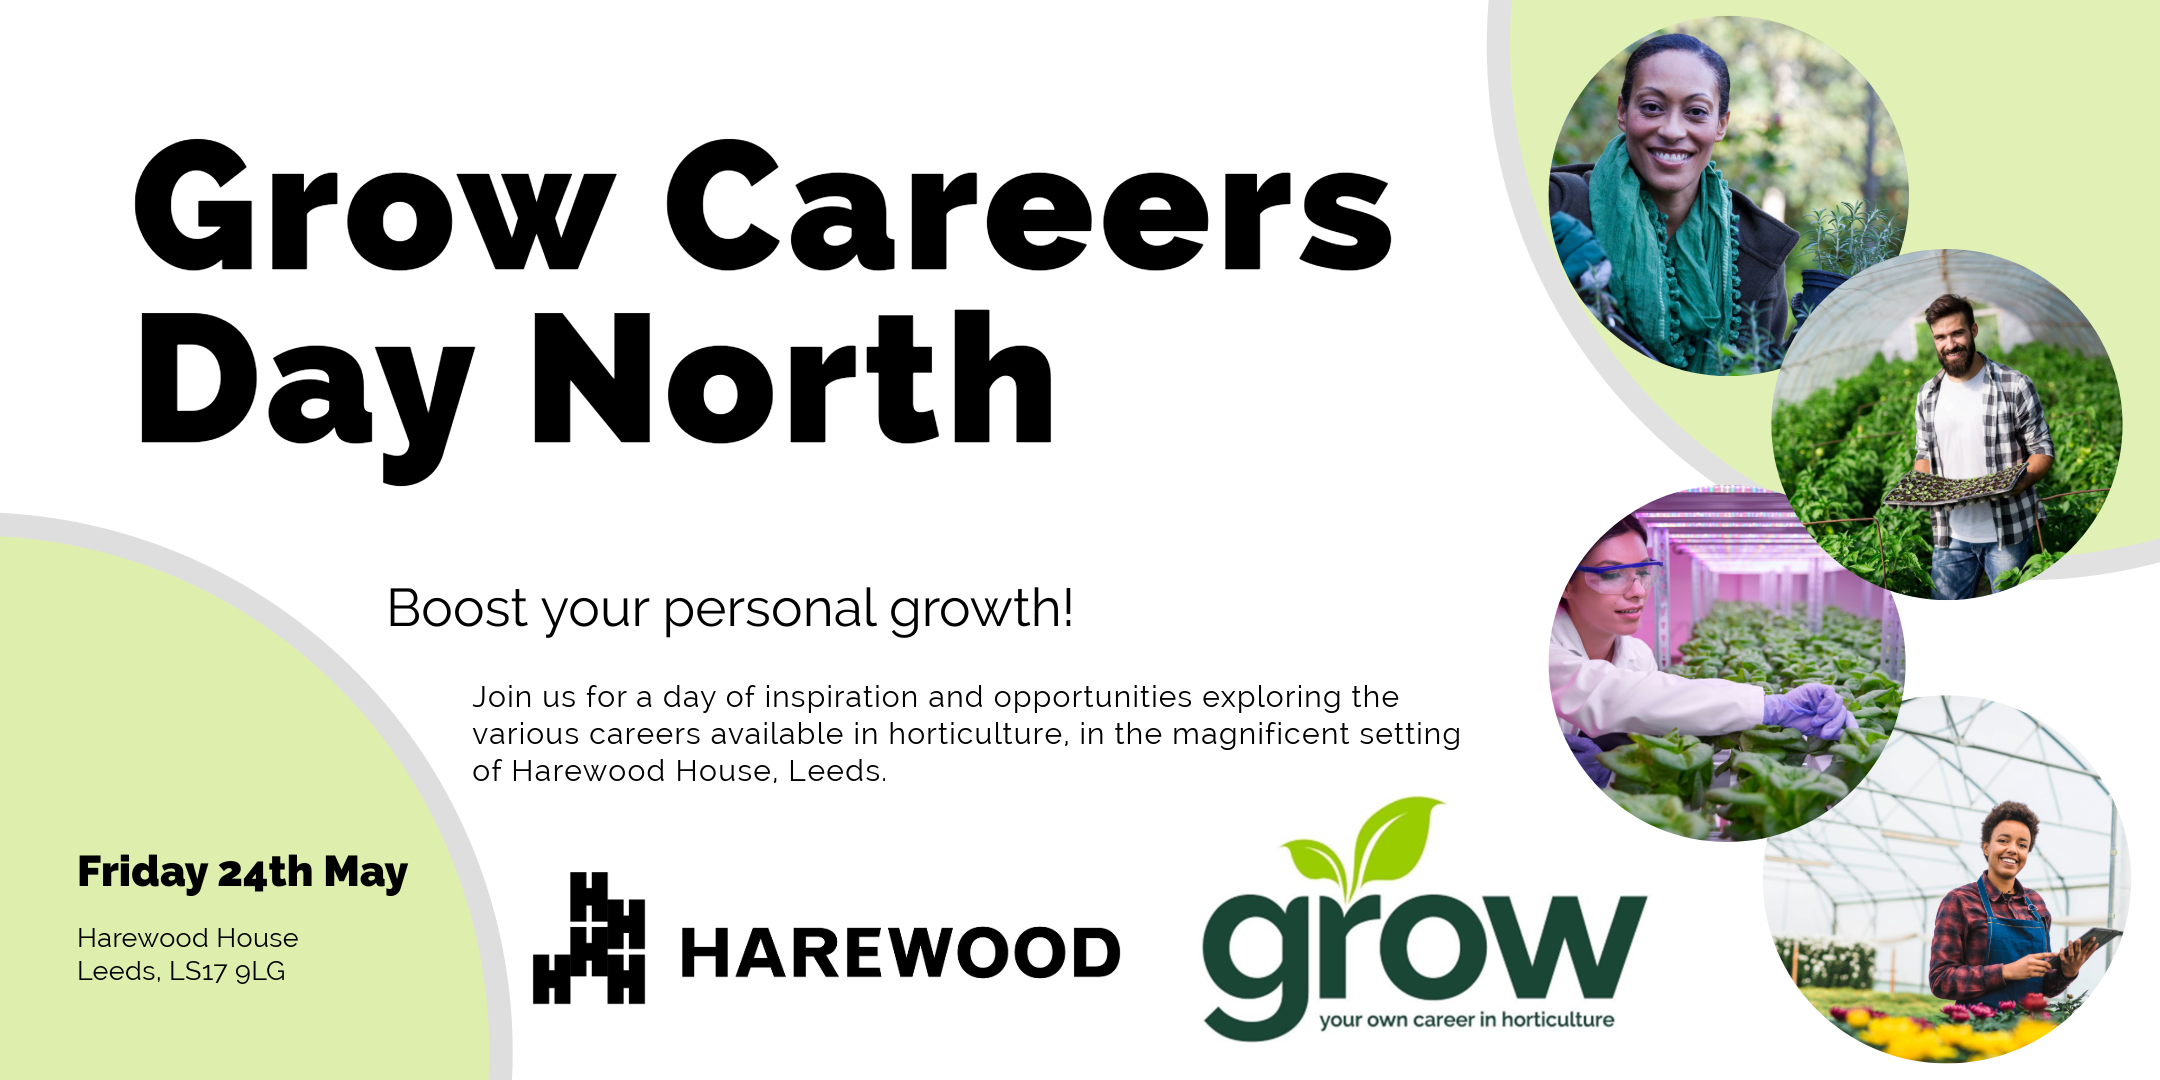 Grow Careers North